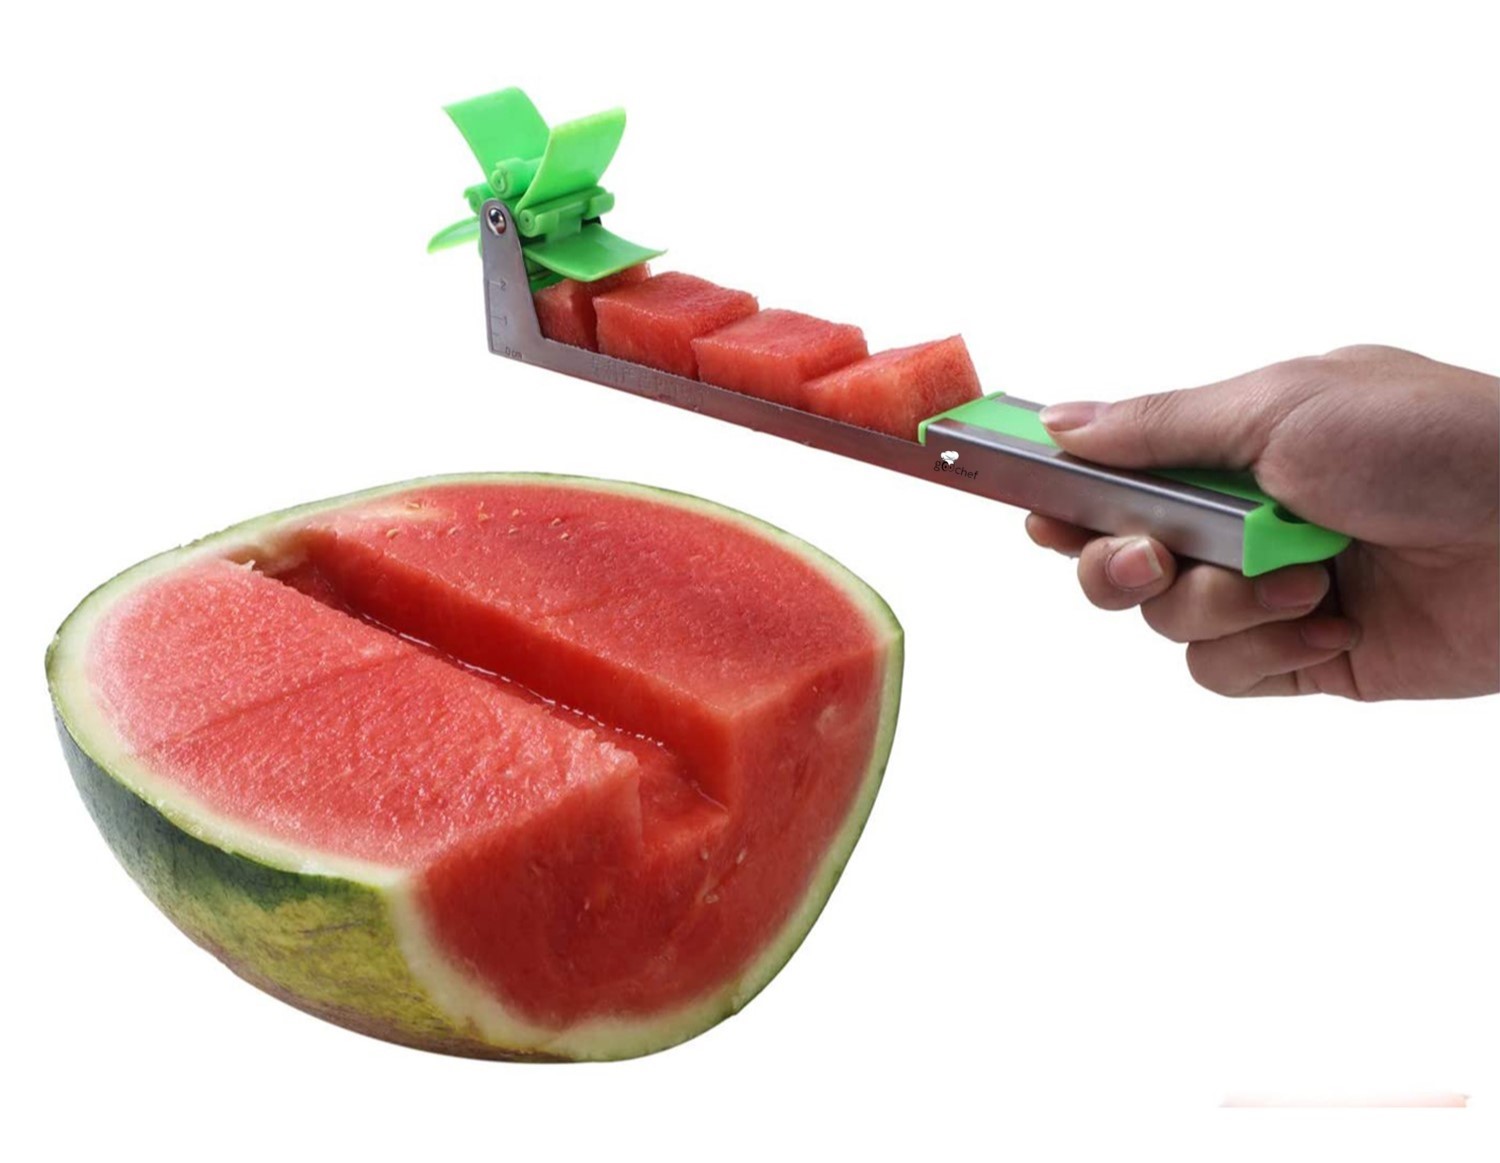 Renewgoo GooChef Watermelon Windmill Stainless Steel Cuber and Slicer One-Push Fruit Melon Cutter Knife